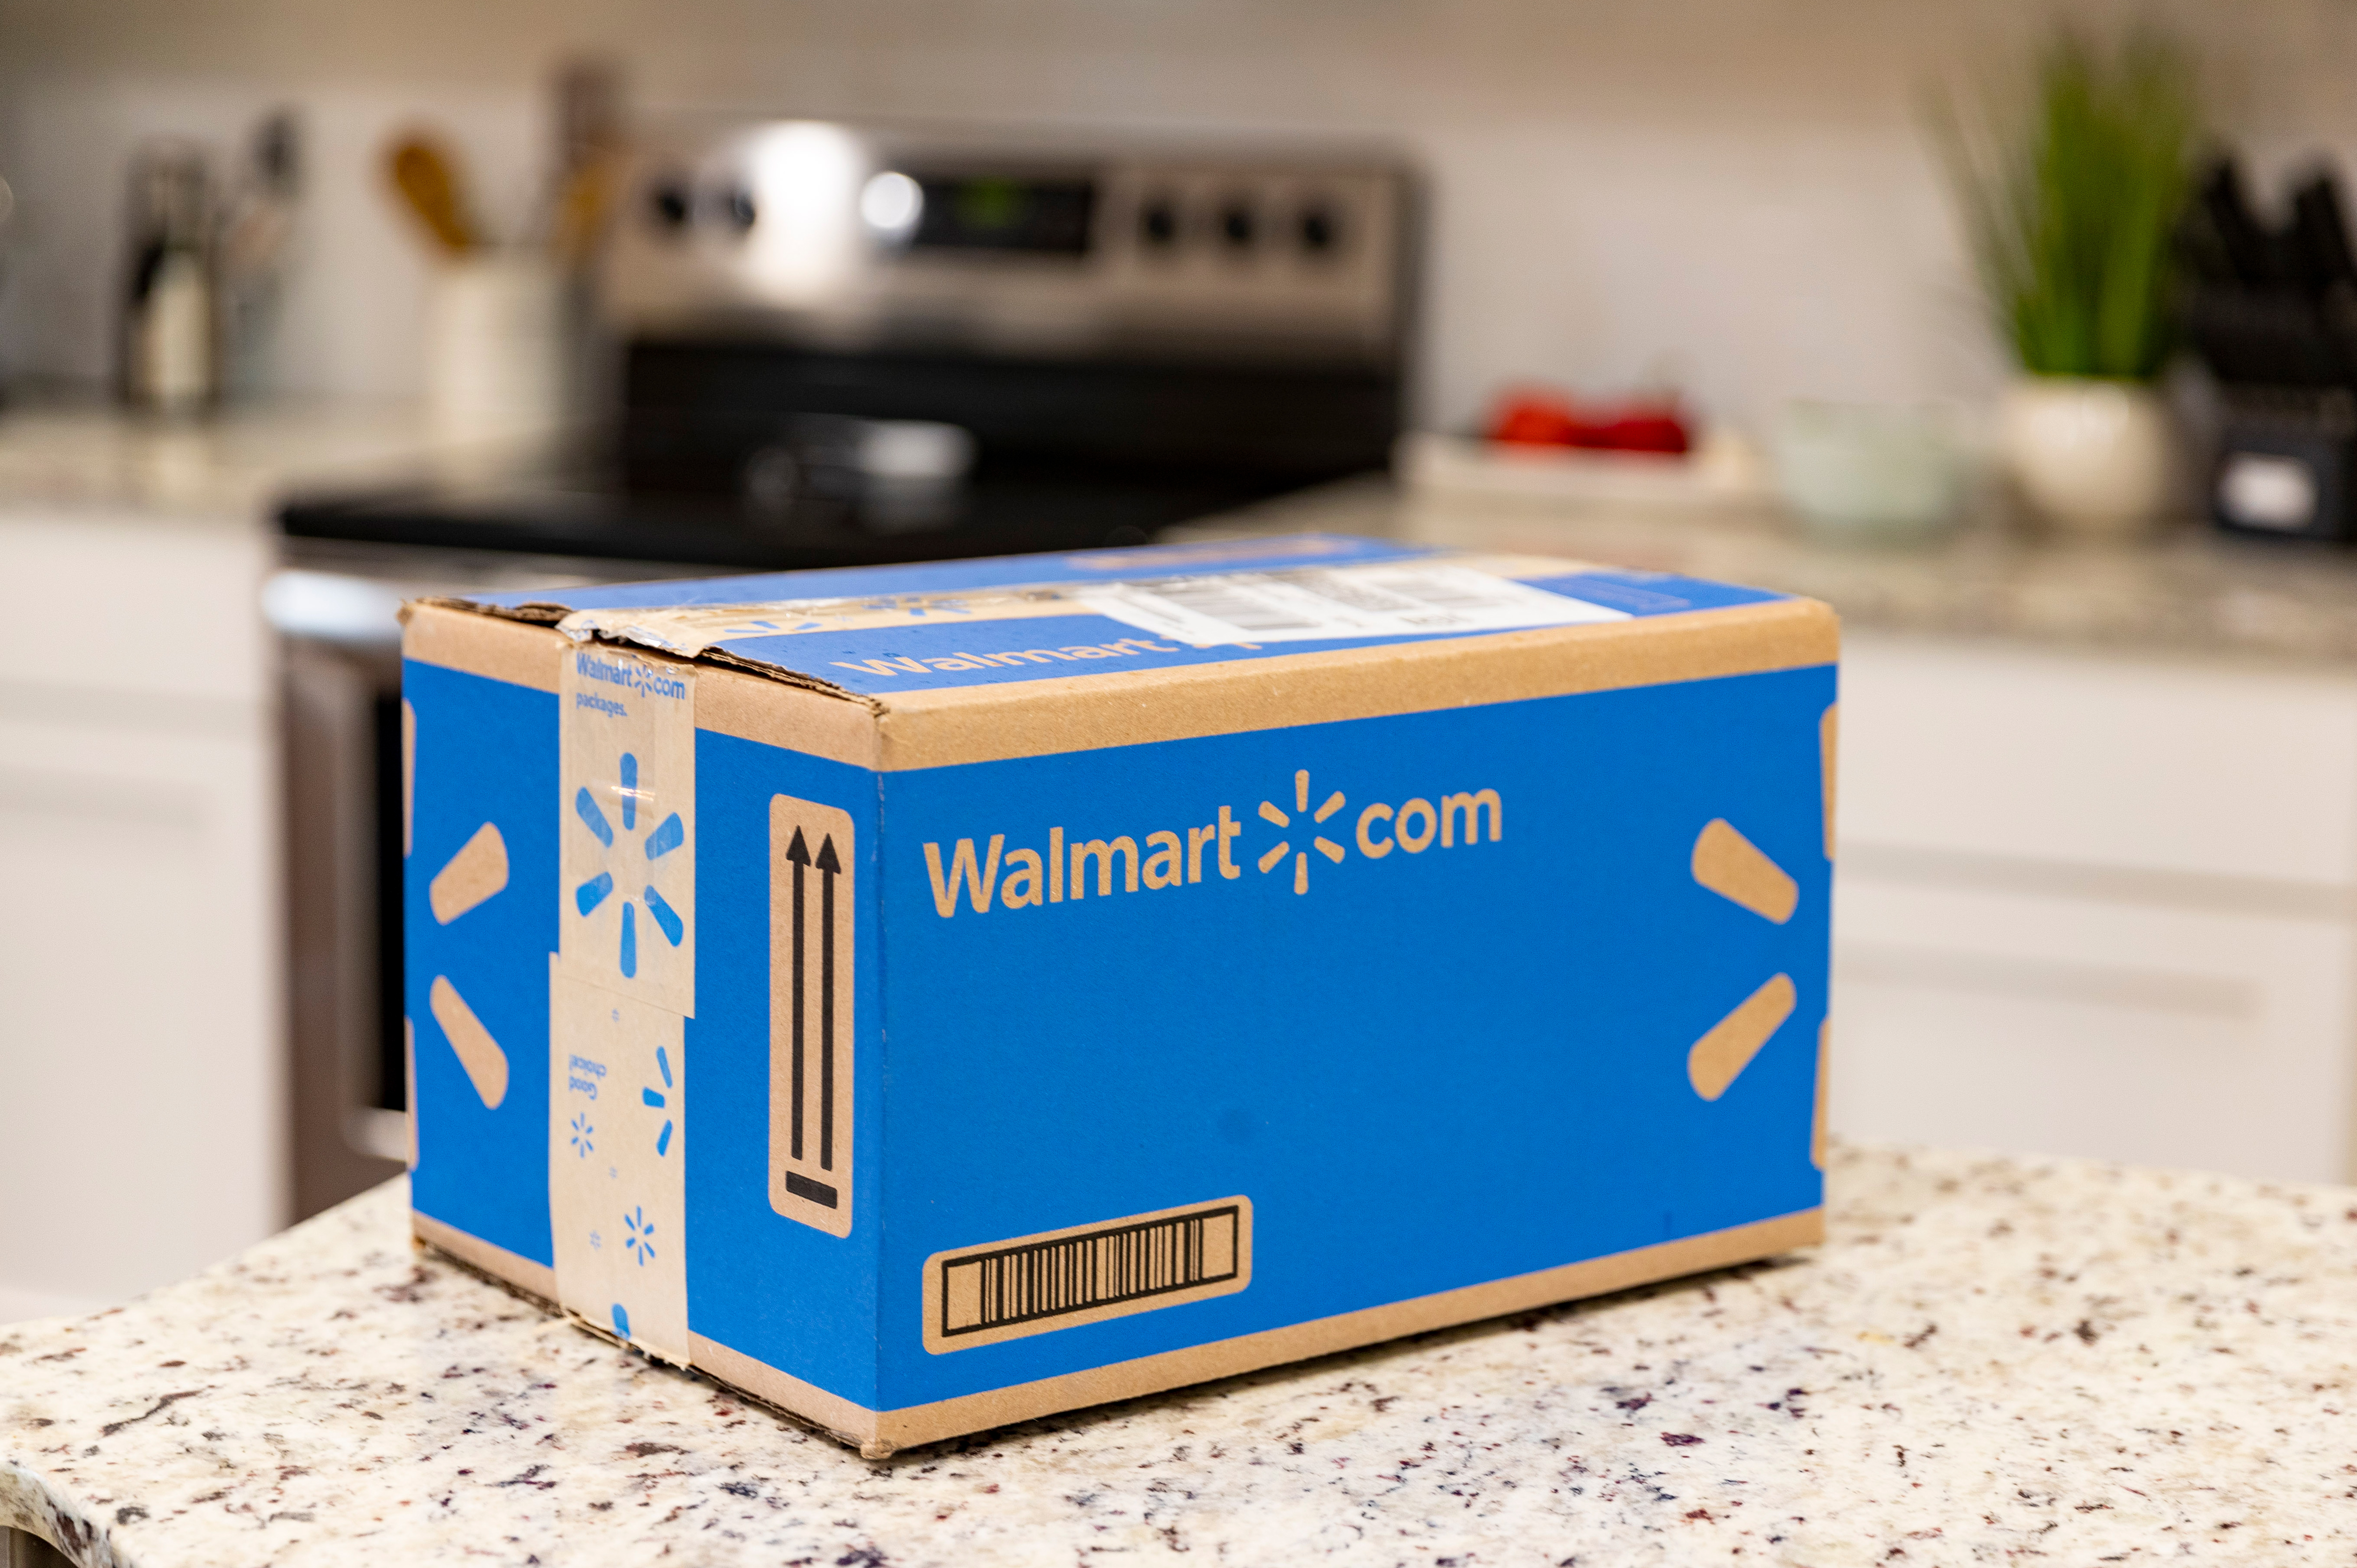 A Walmart.com box sitting on a kitchen counter